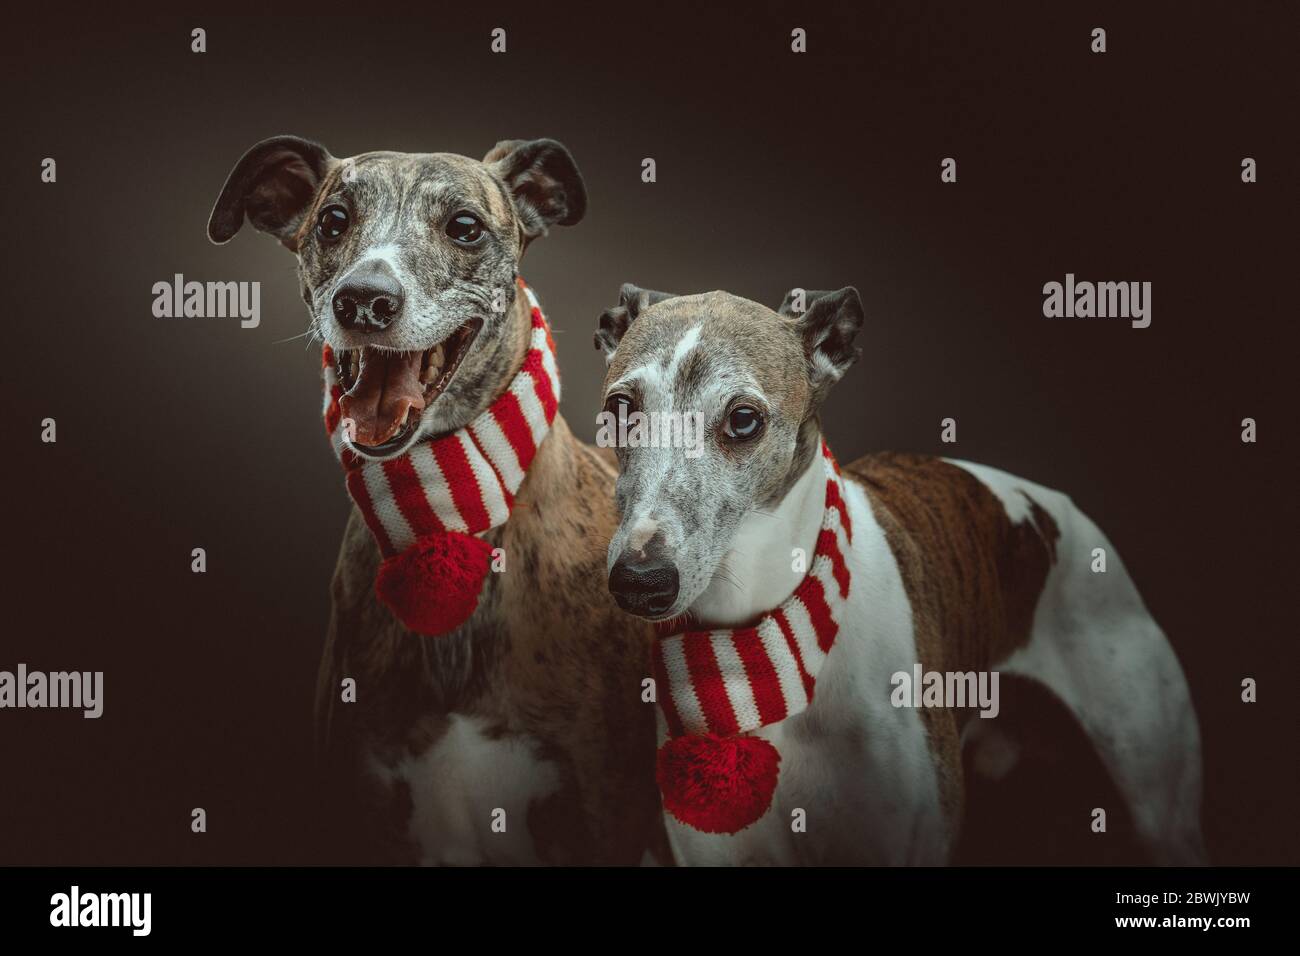 Two Whippets dressed up for Christmas. Studio shot. Moody dark lighting, dark background. Stock Photo